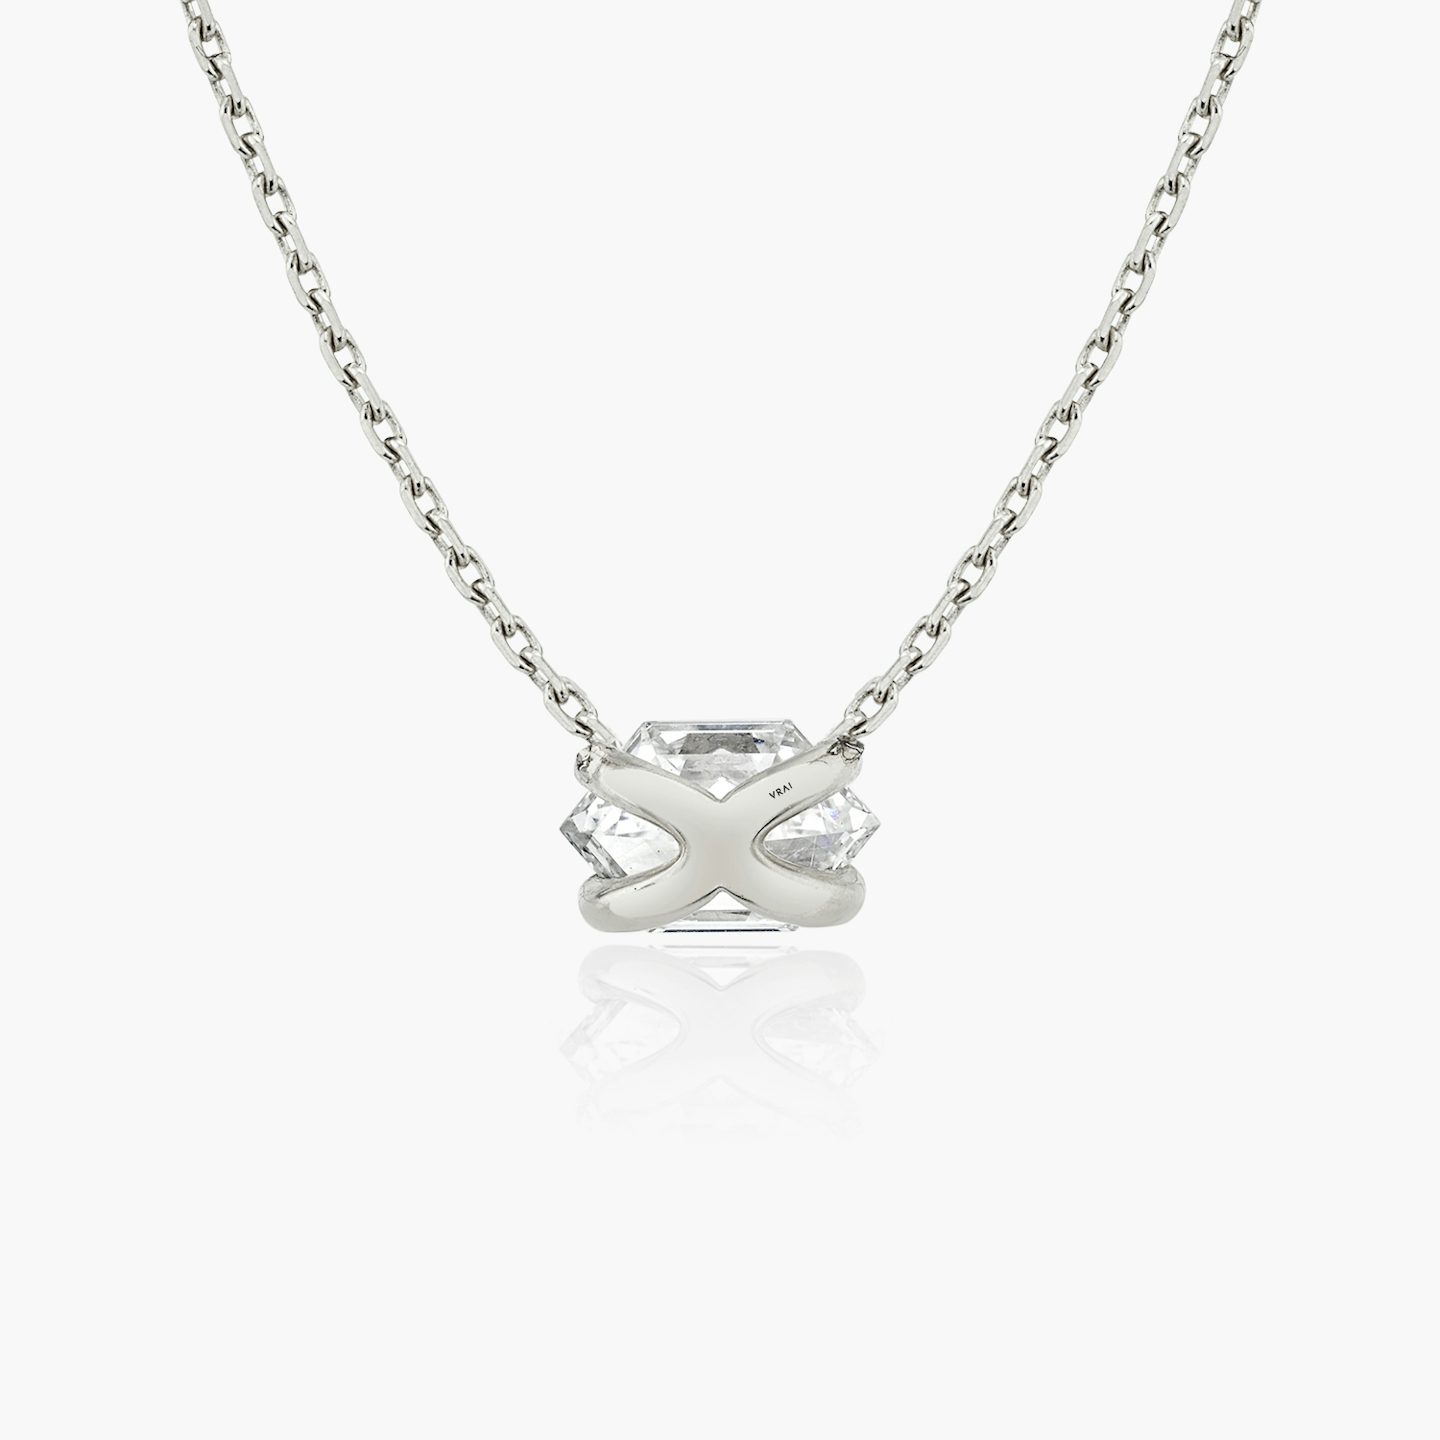 Collier VRAI Iconic | longHexagon | 14k | Or blanc 18 carats | Poids en carats: 3/4